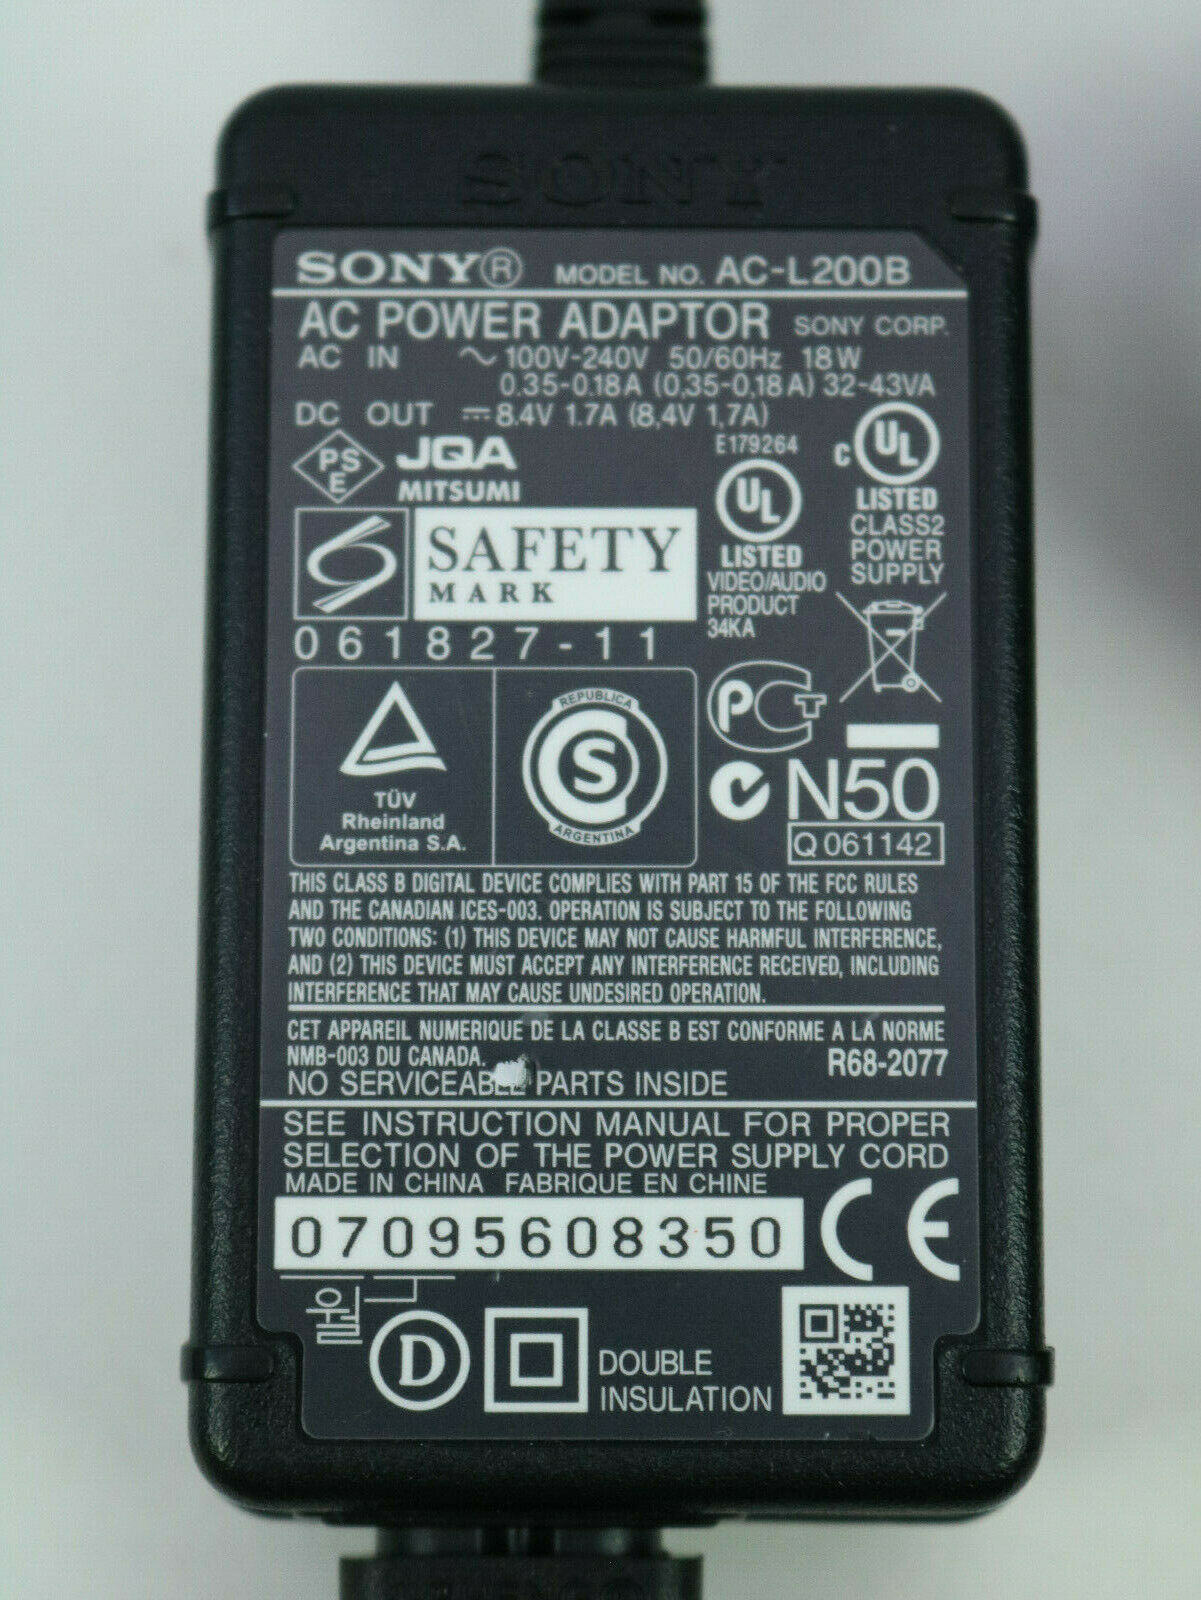 NEW Sony Handycam AC-L200B Camcorder Black AC Adapter 8.4V 1.7A